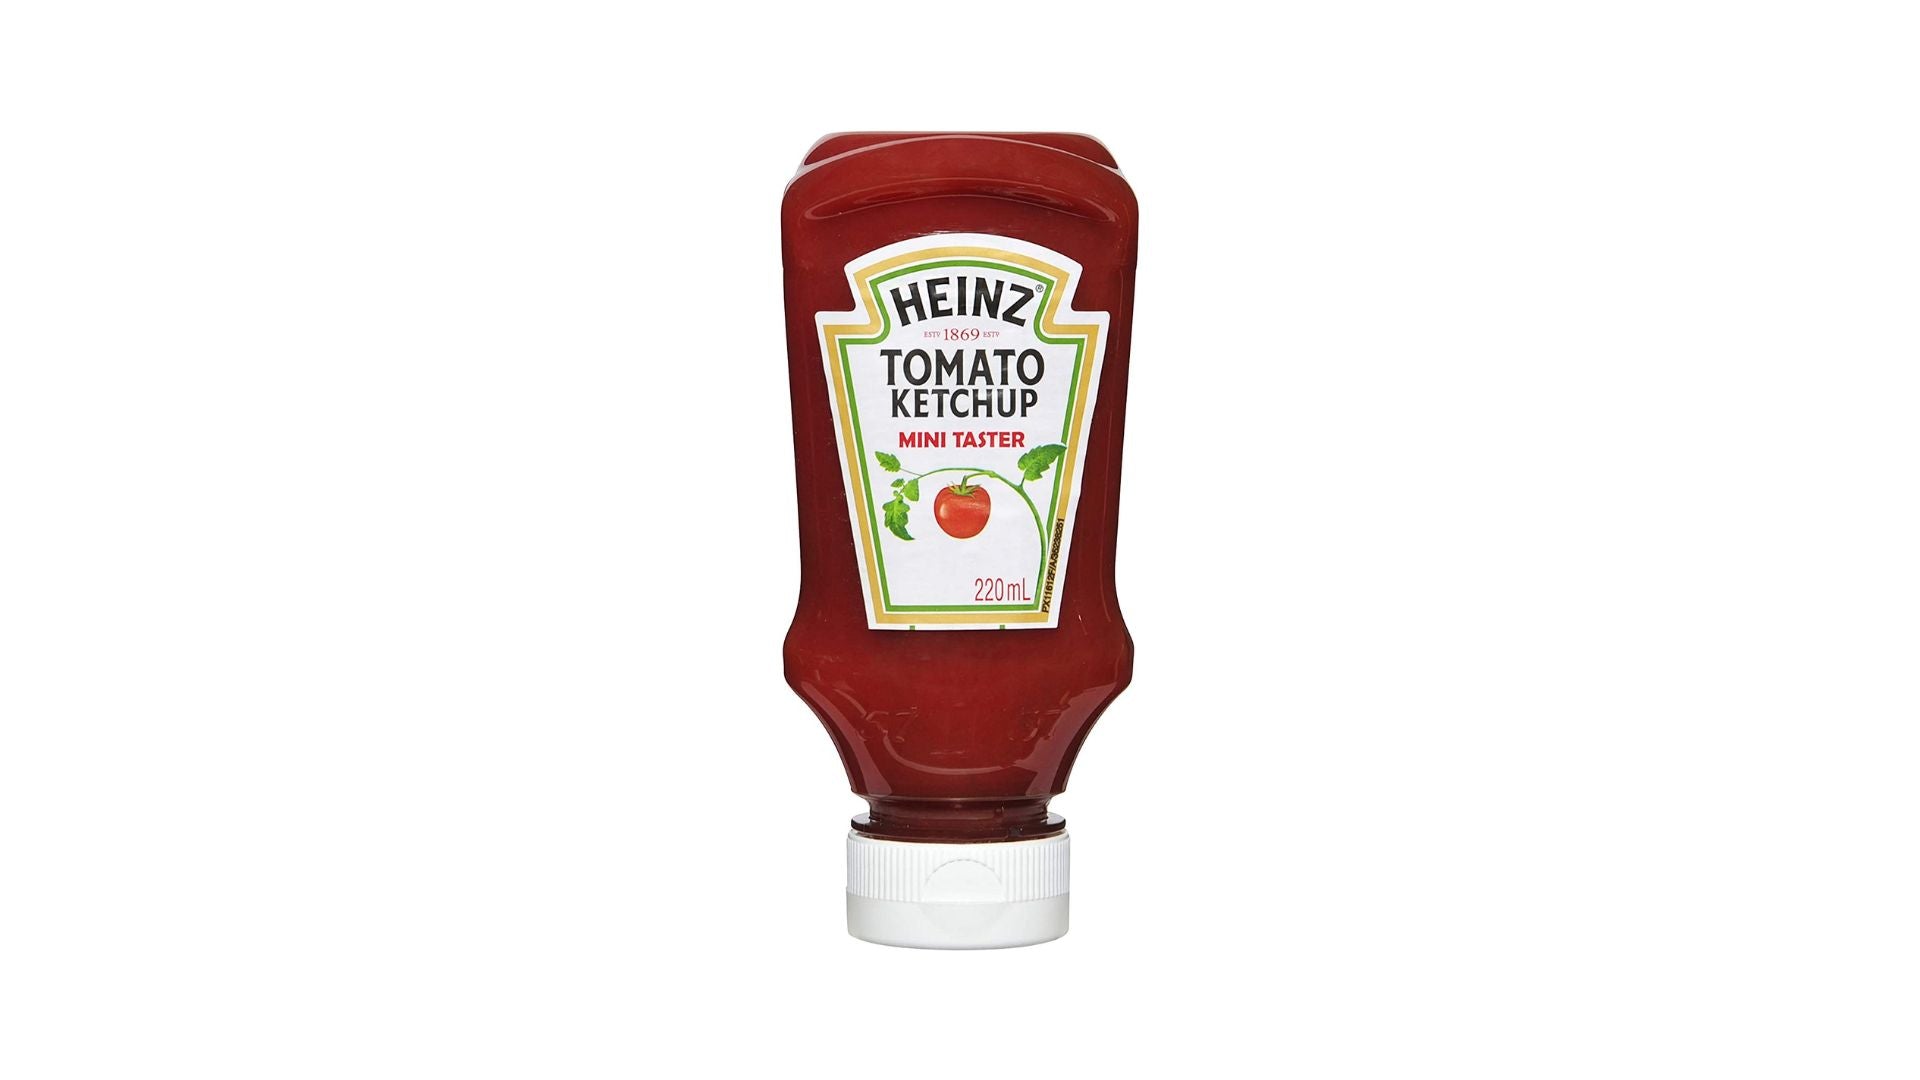 Heinz Mini Tomato Ketchup 220ml